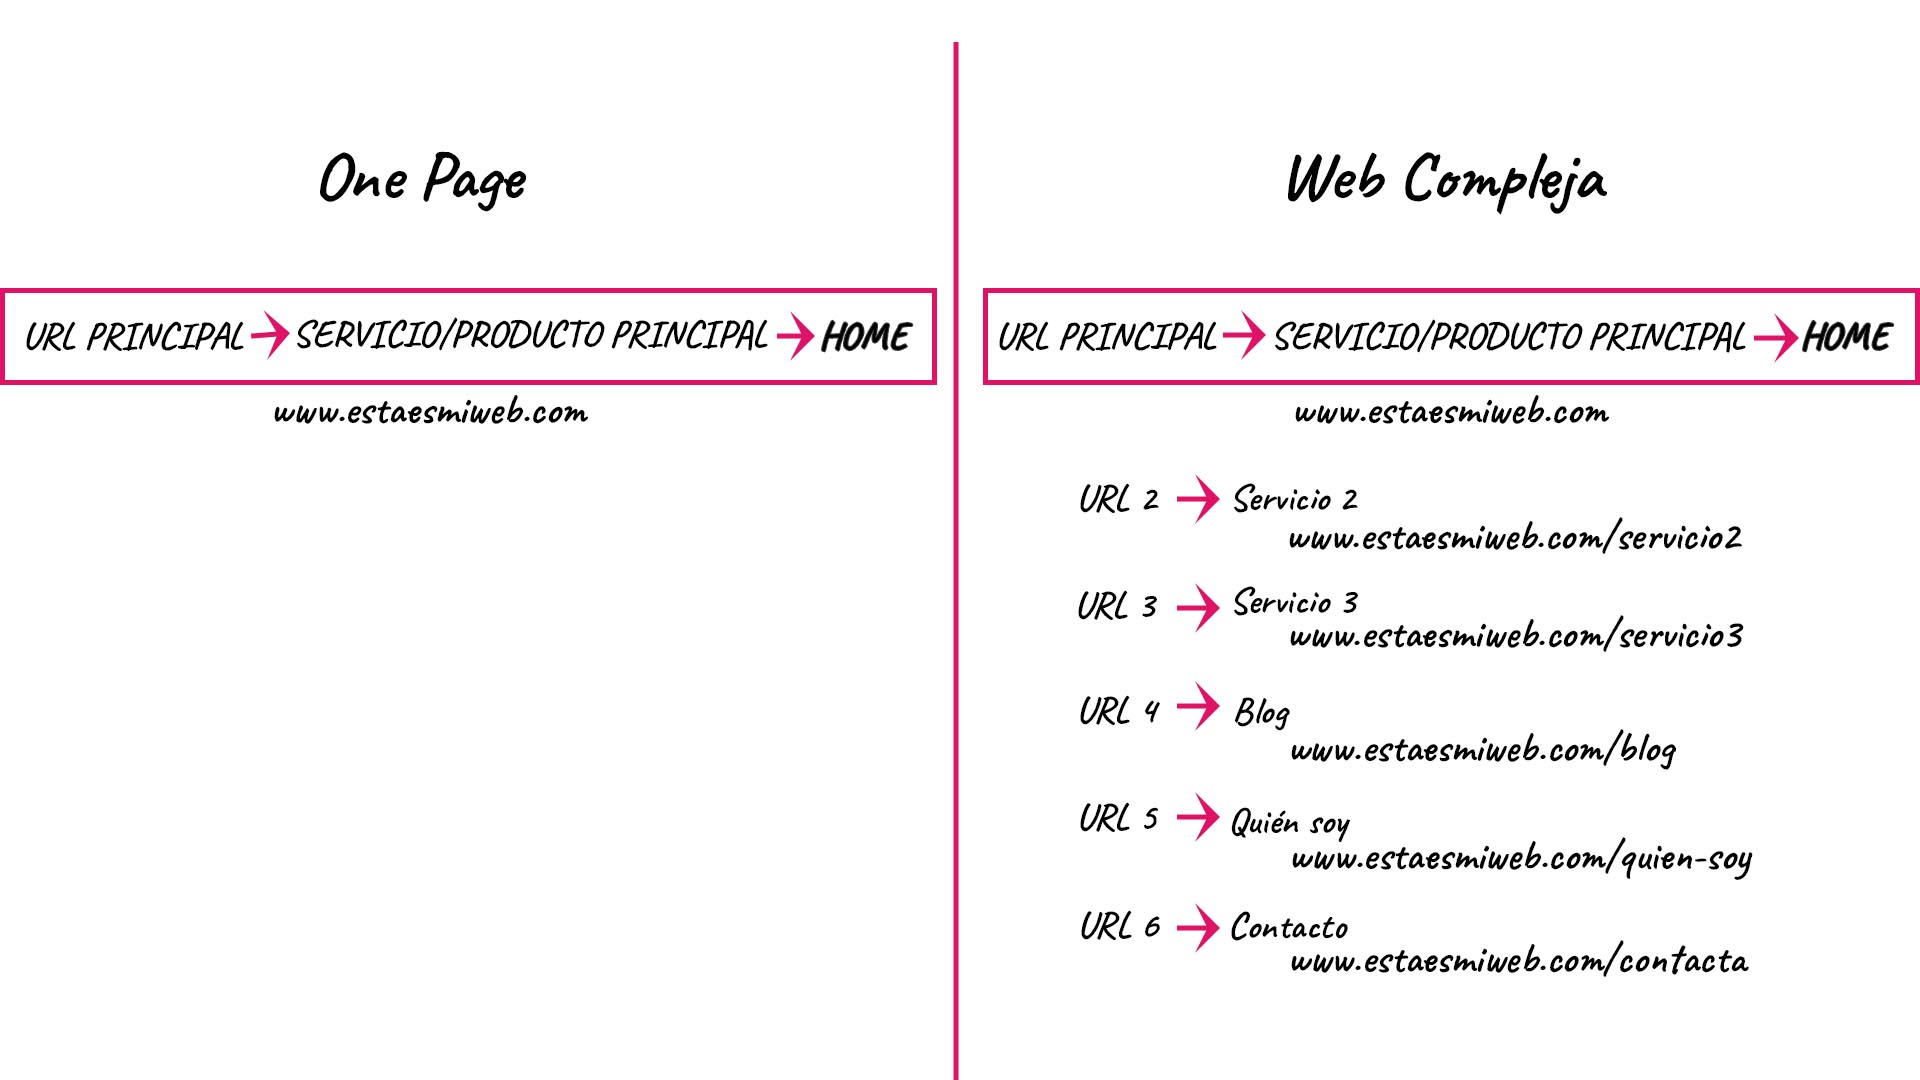 onepage-vs-web-compleja